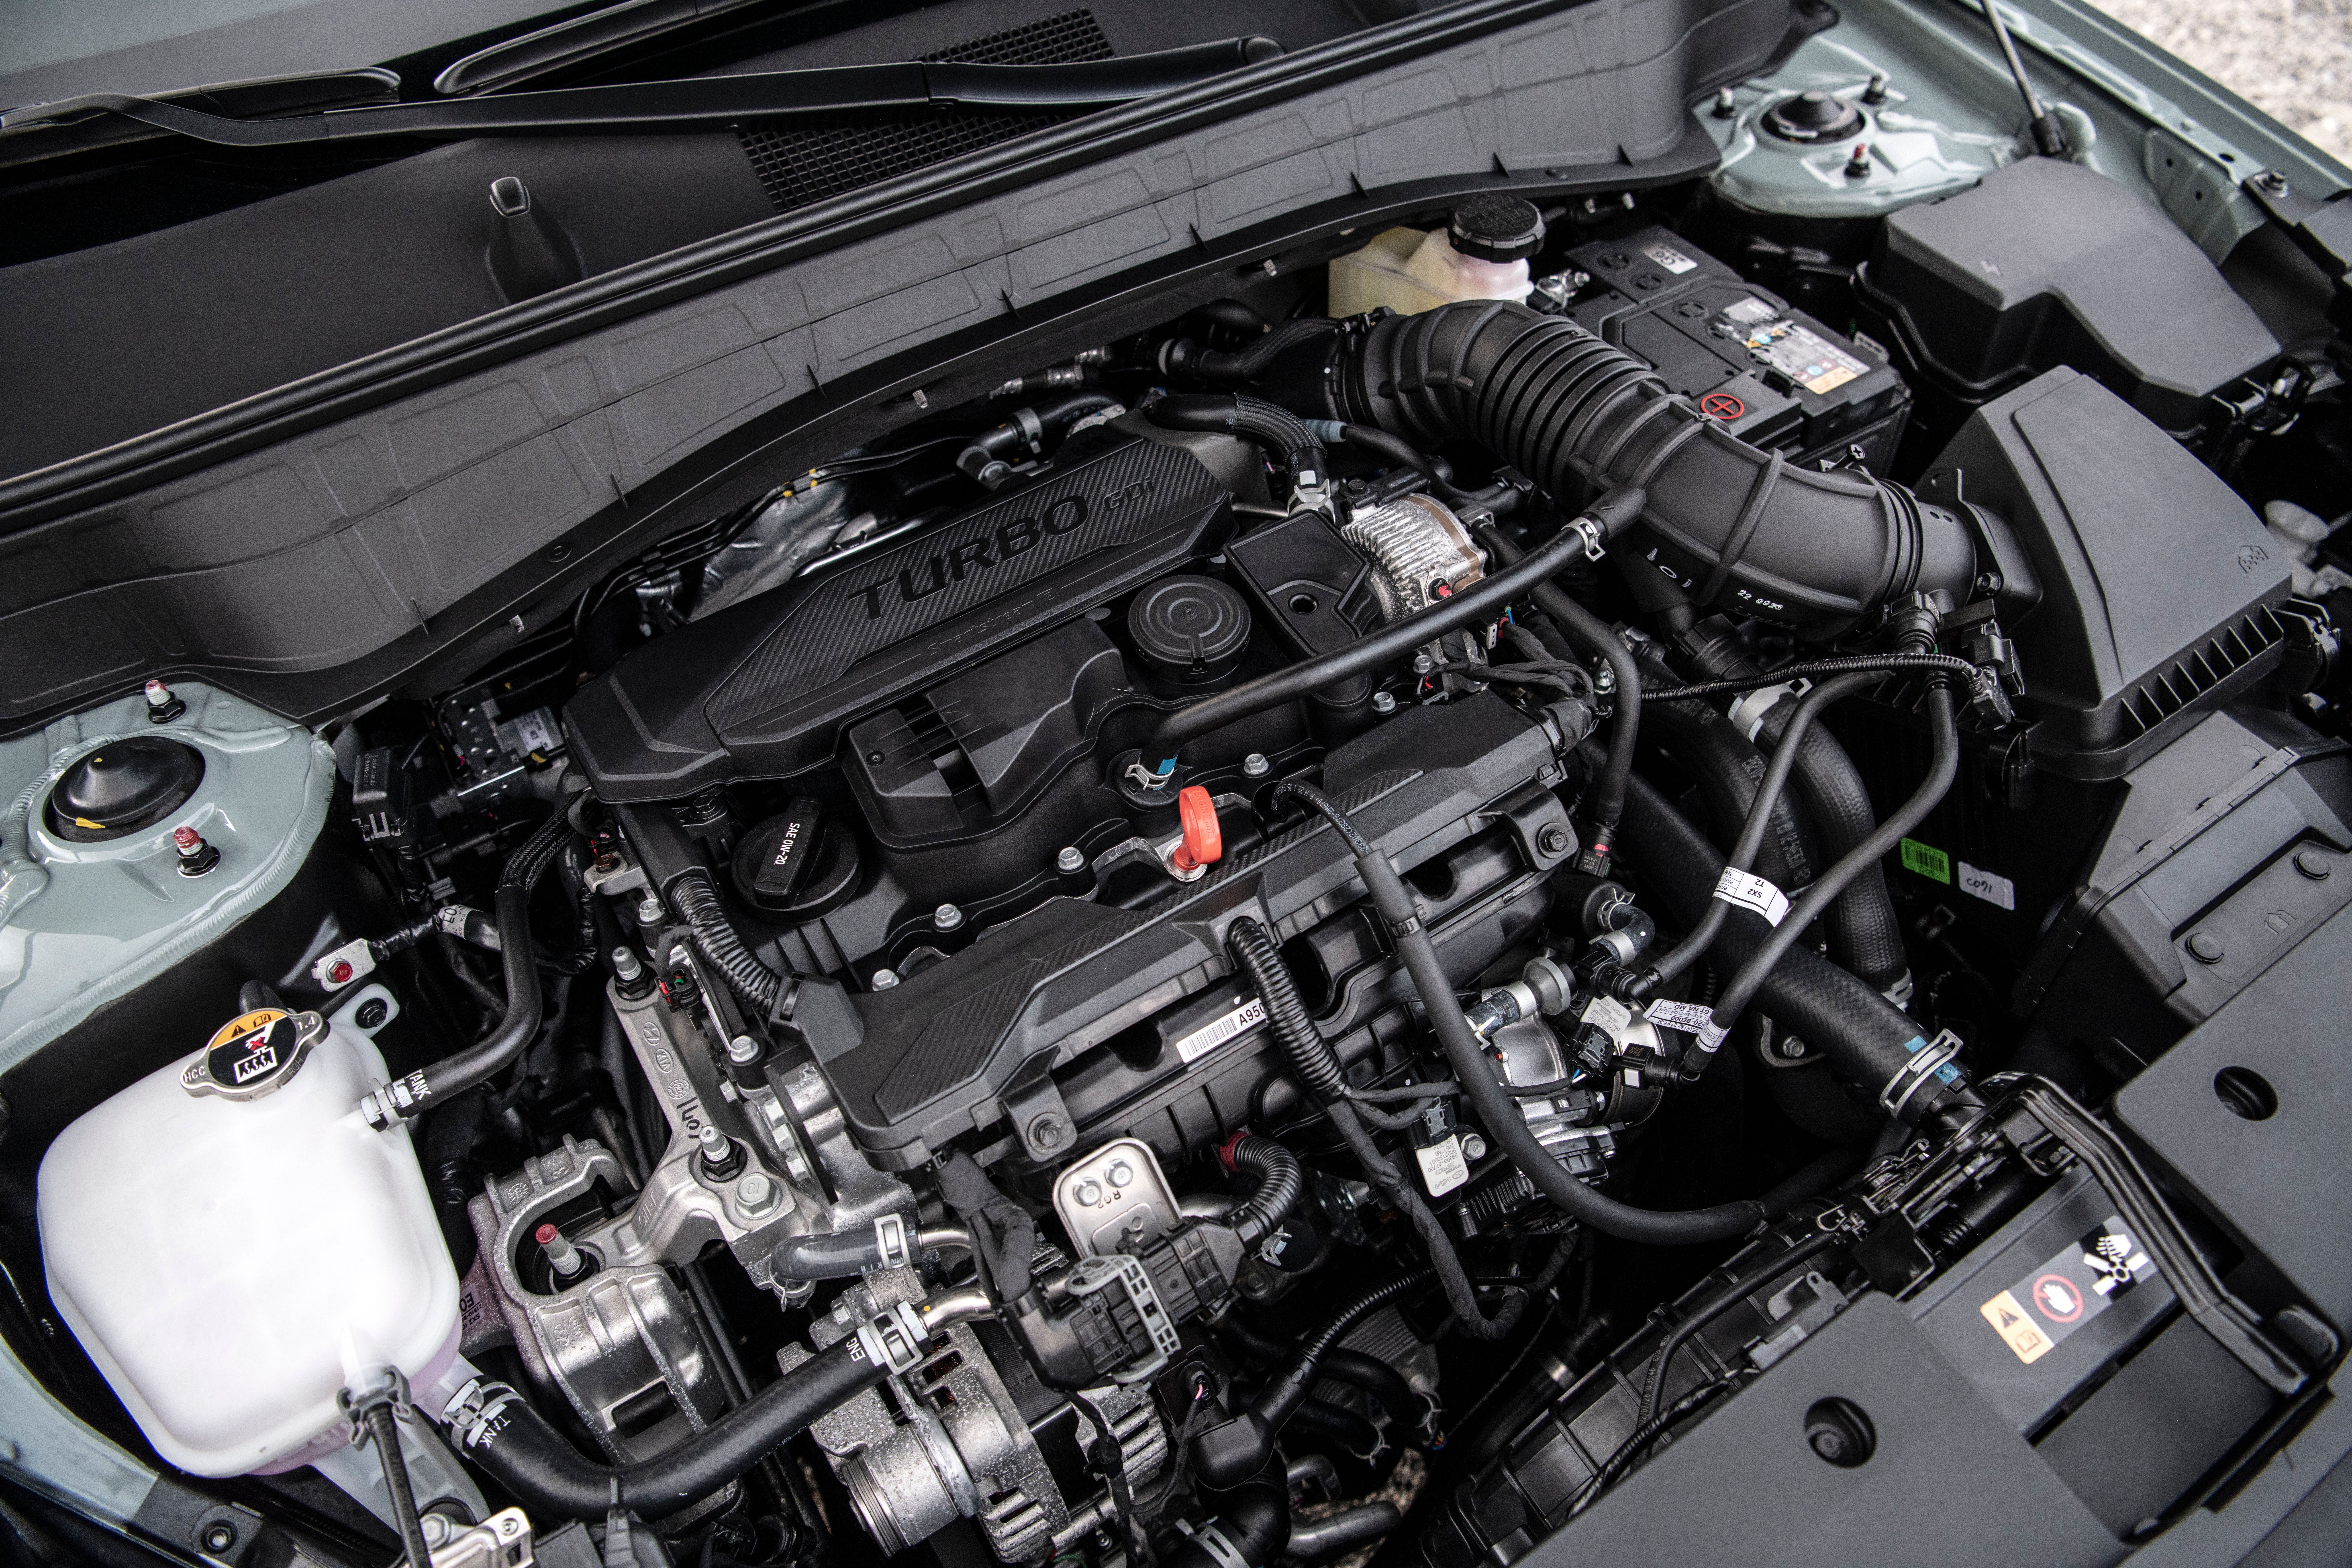 1.6-liter four-cylinder turbocharged engine